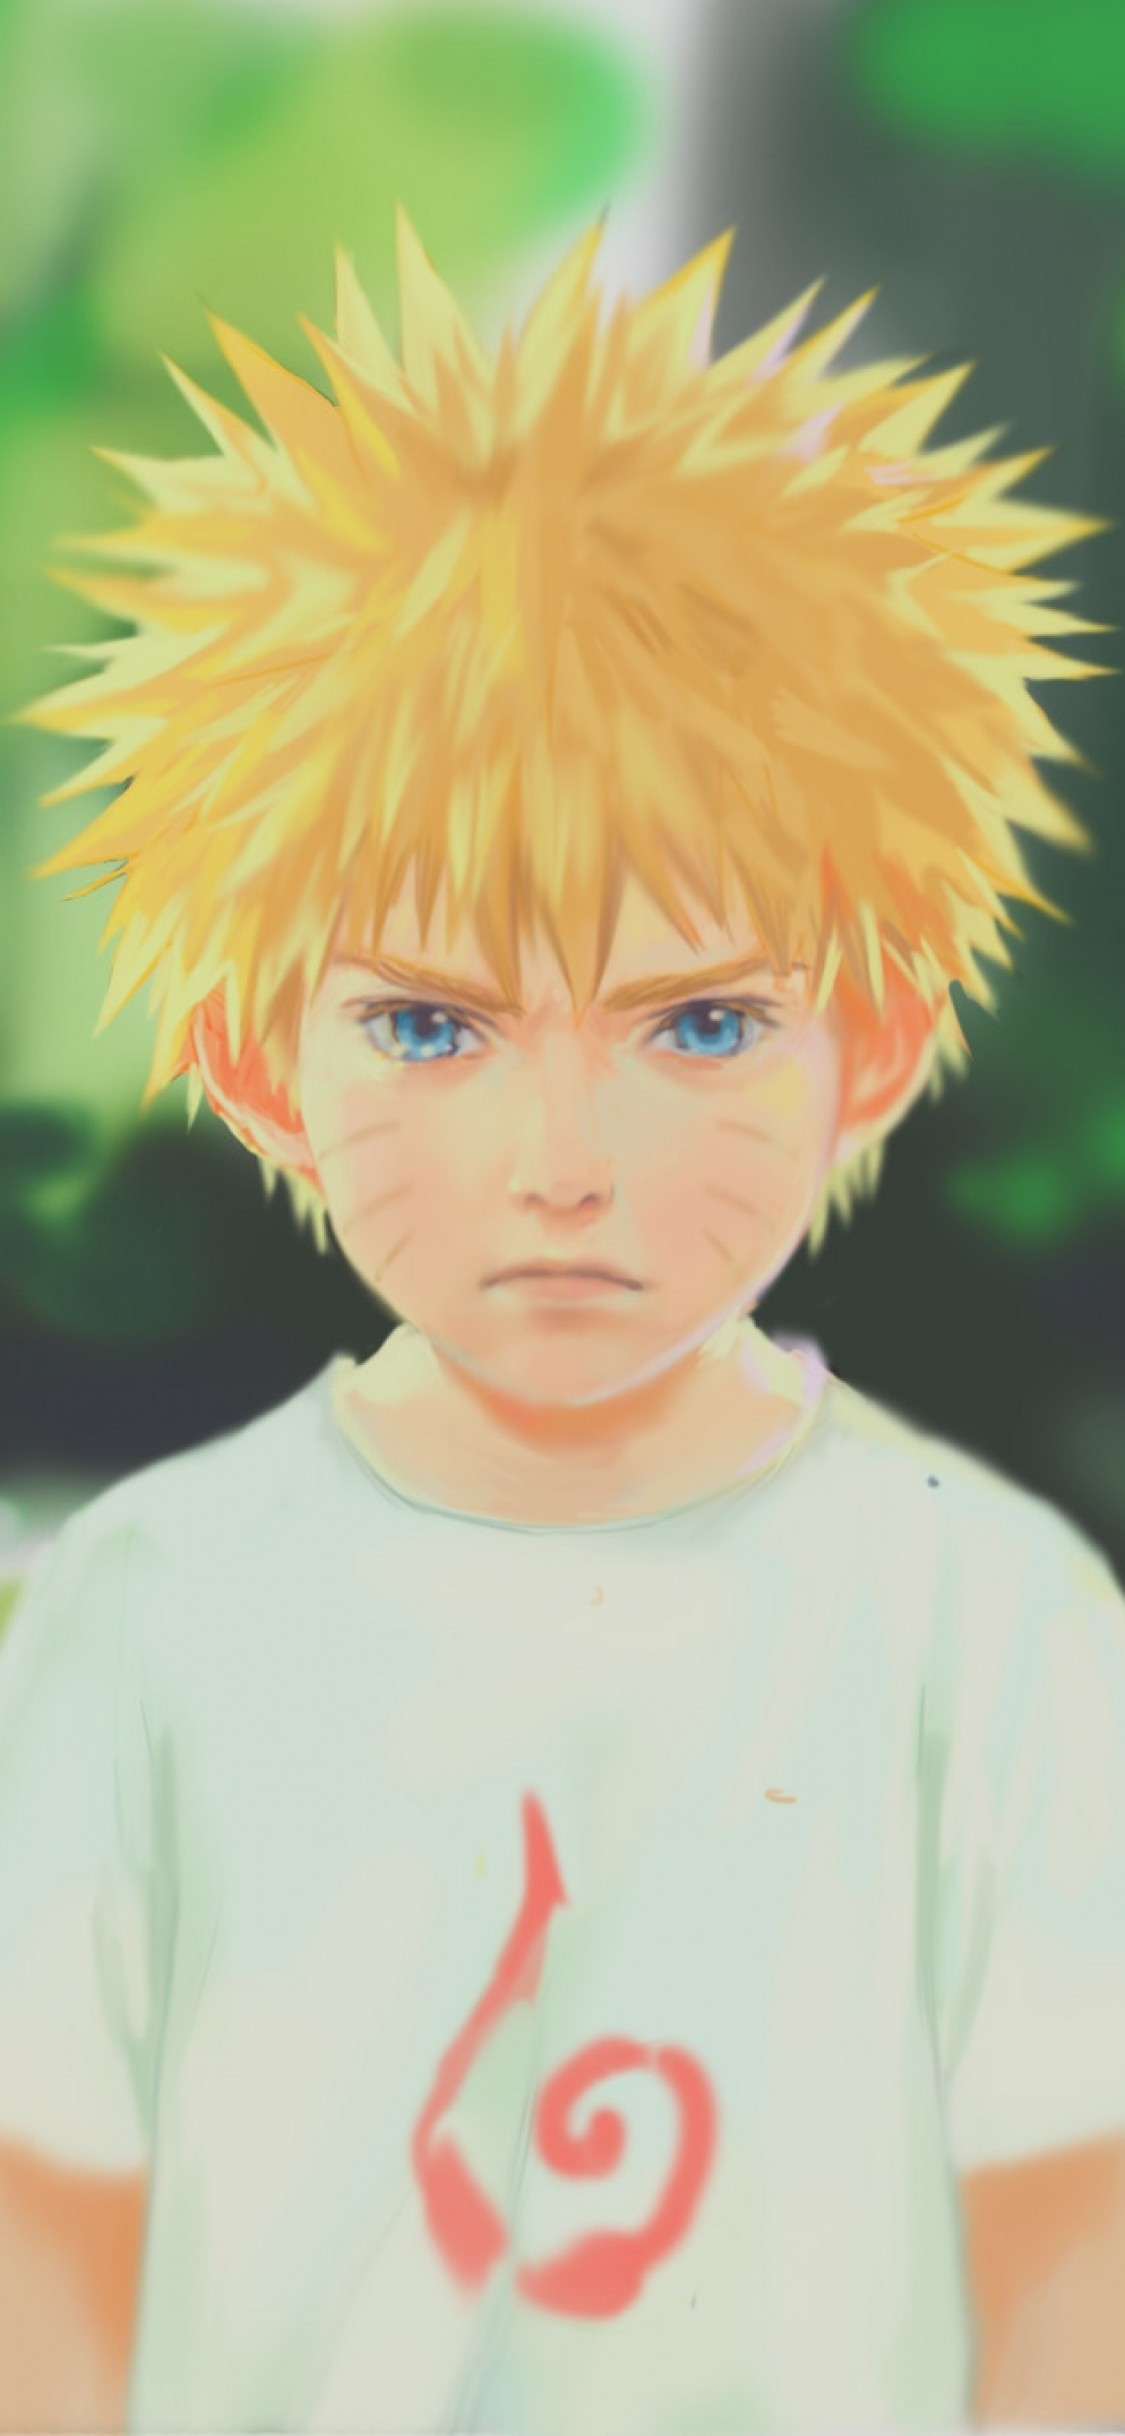 Download 1125x2436 Uzumaki Naruto, Childhood, Semi Realistic, Blue Eyes, Naruto Wallpaper for iPhone 11 Pro & X